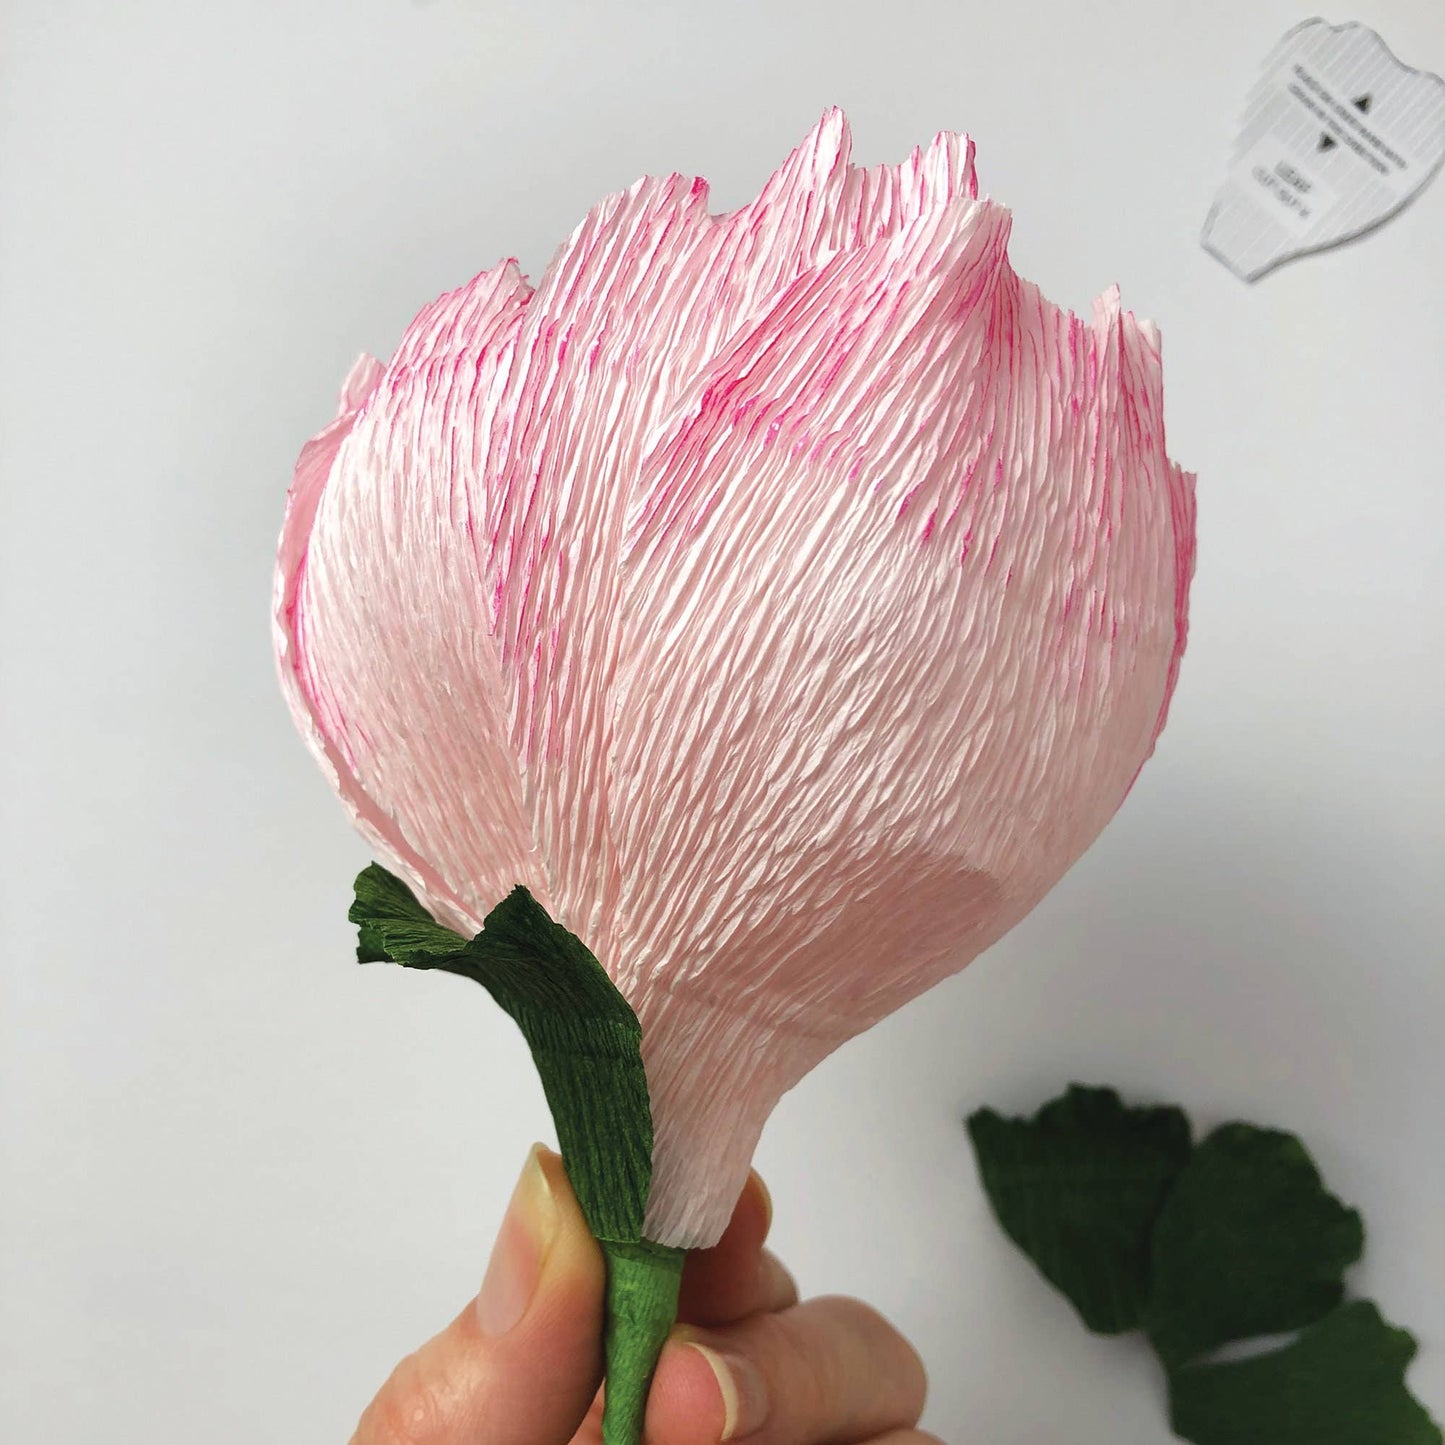 Paper Flower Kit - Peony